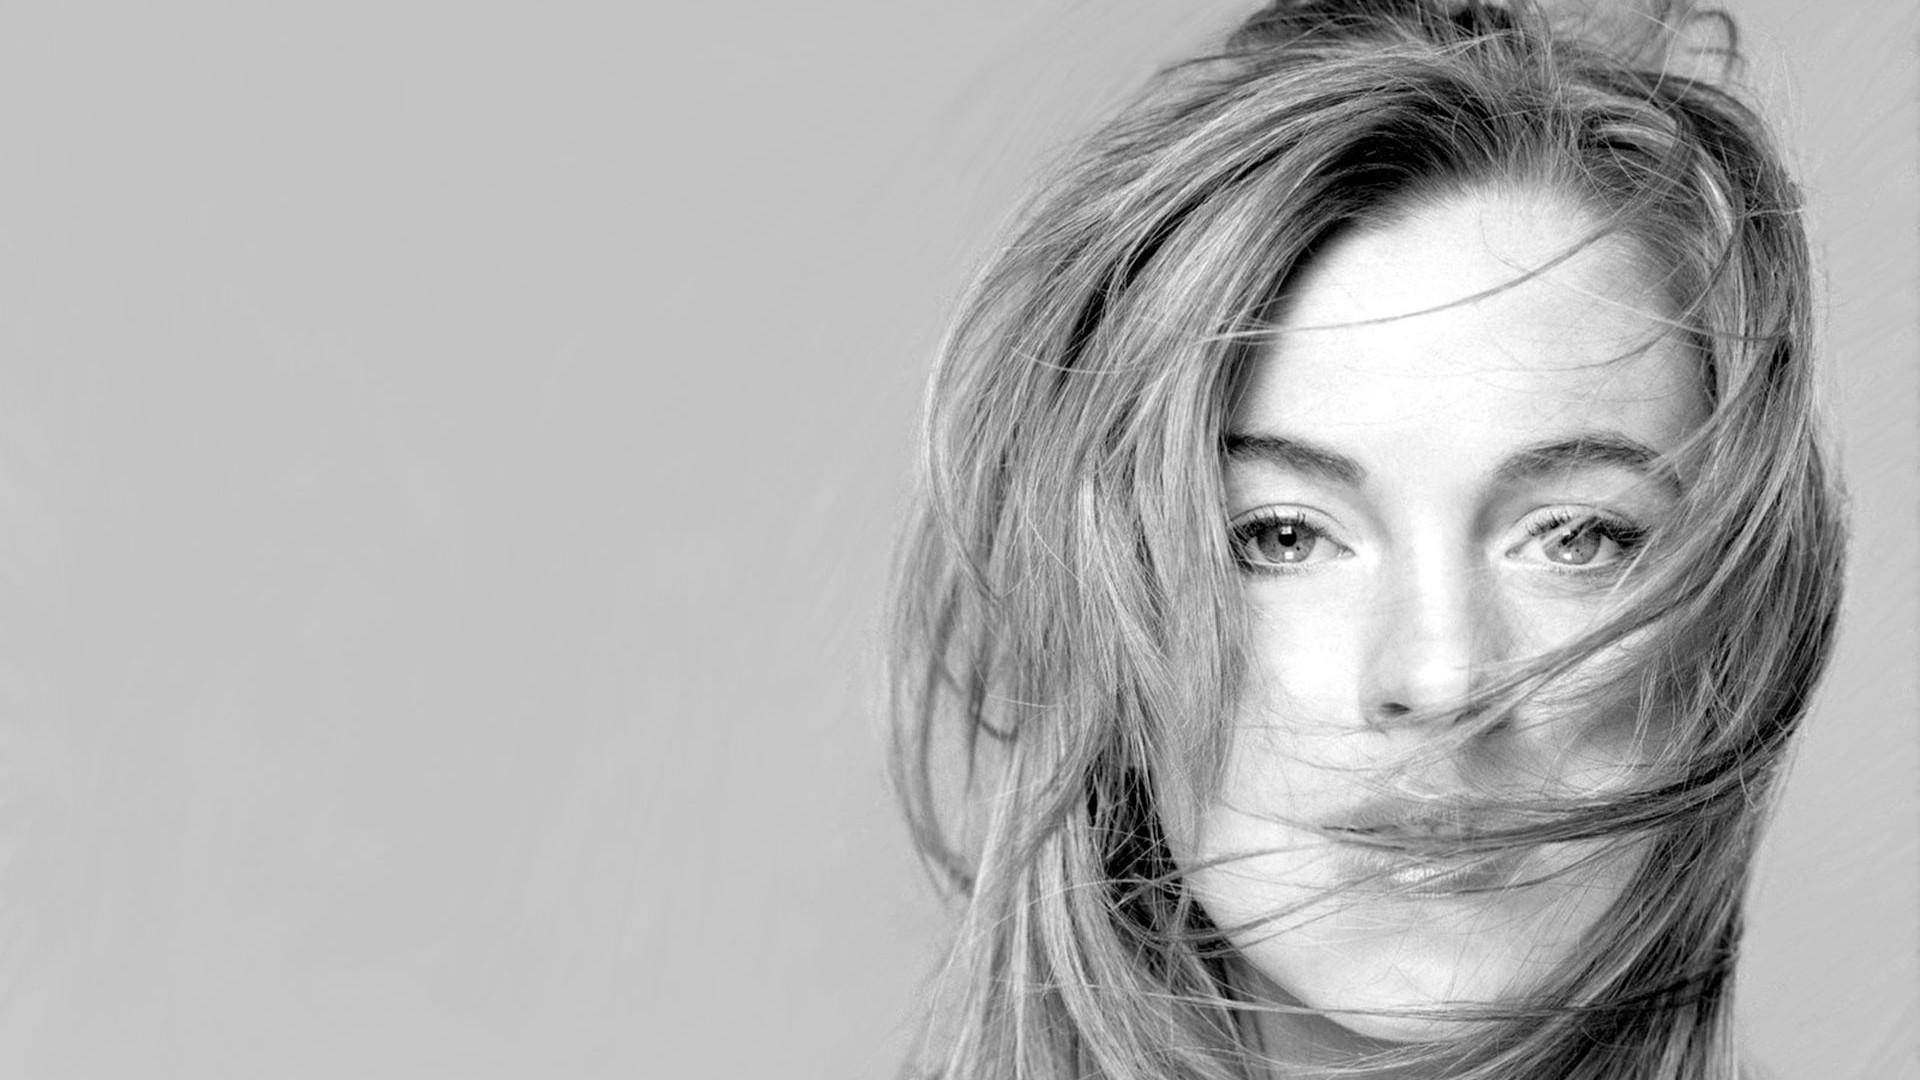 Monochromatic Lindsay Lohan Wallpaper